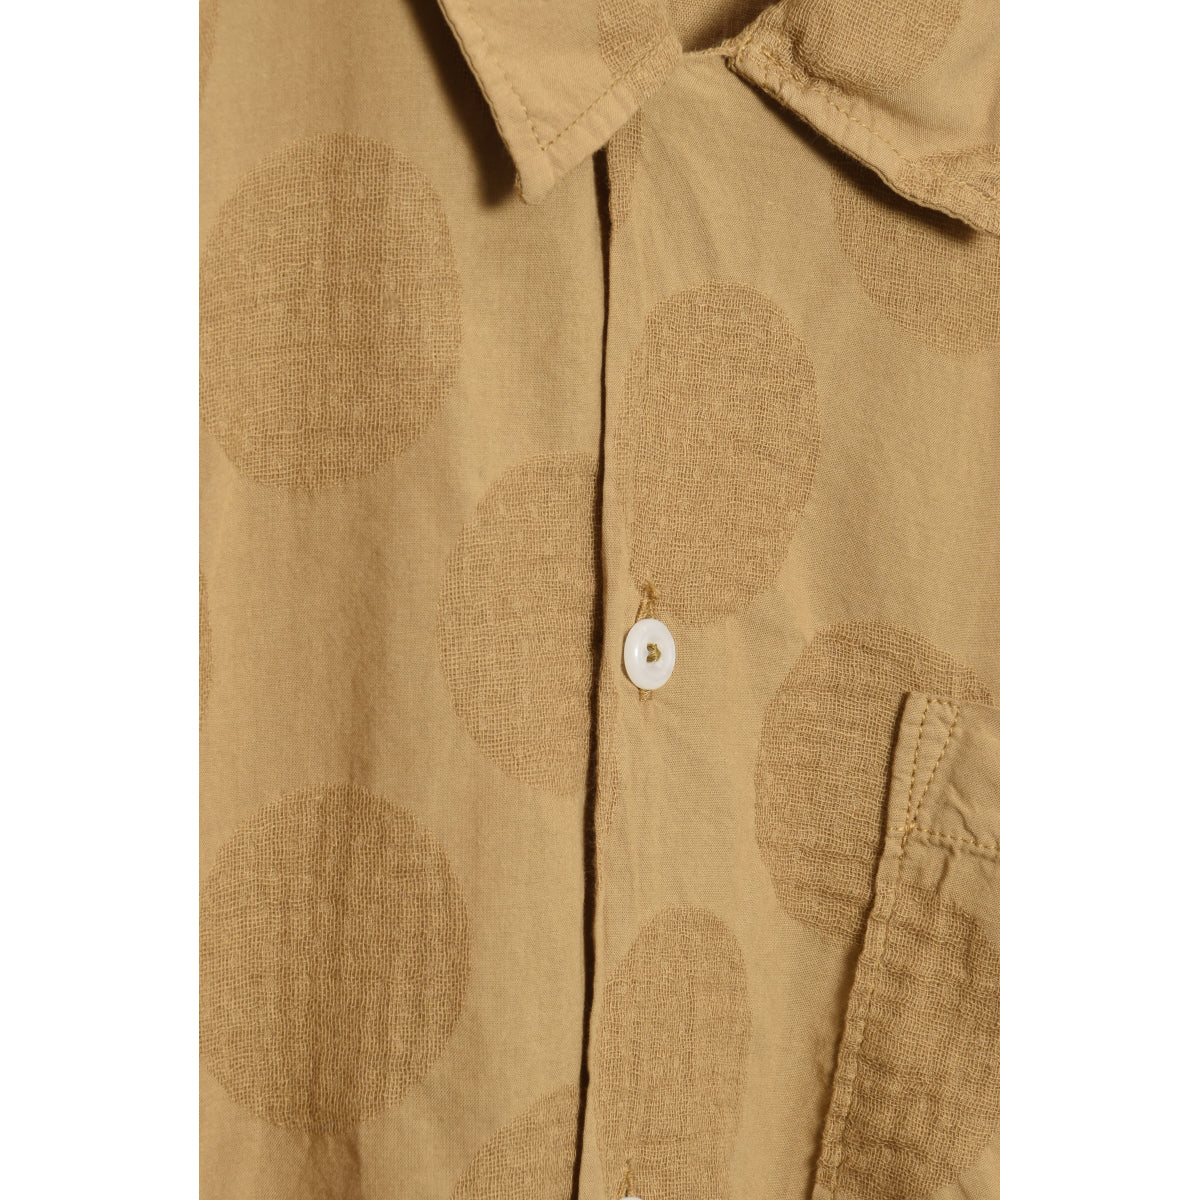 Universal Works Road Shirt dot cotton cumin 28684